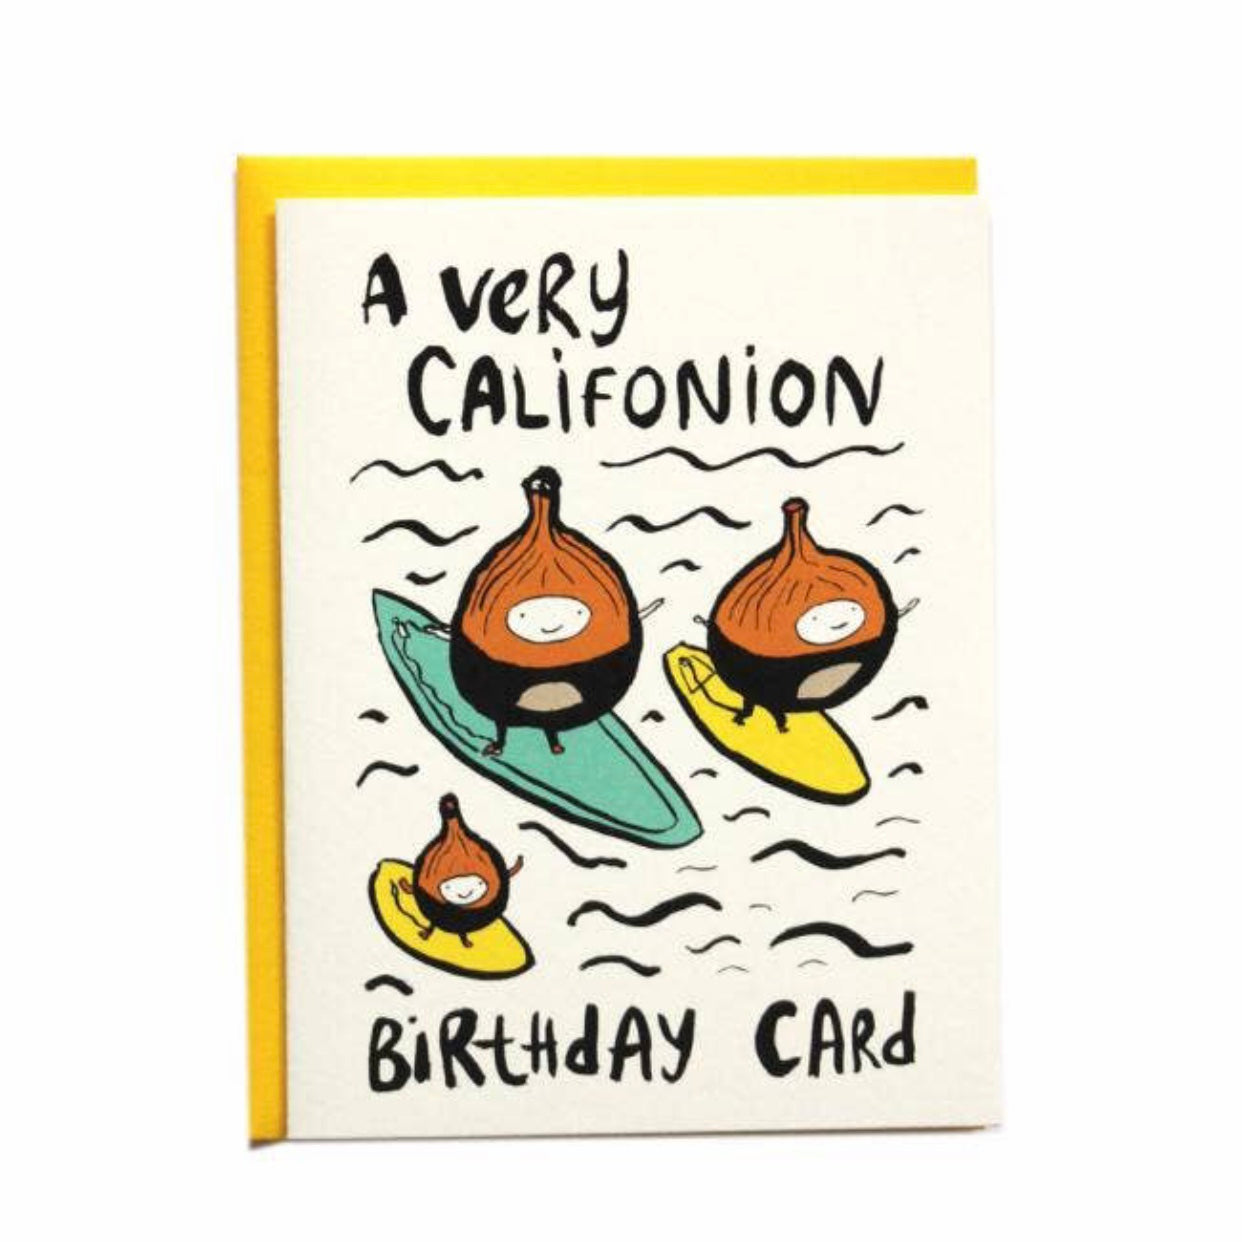 a very califonion birthday card greeting card